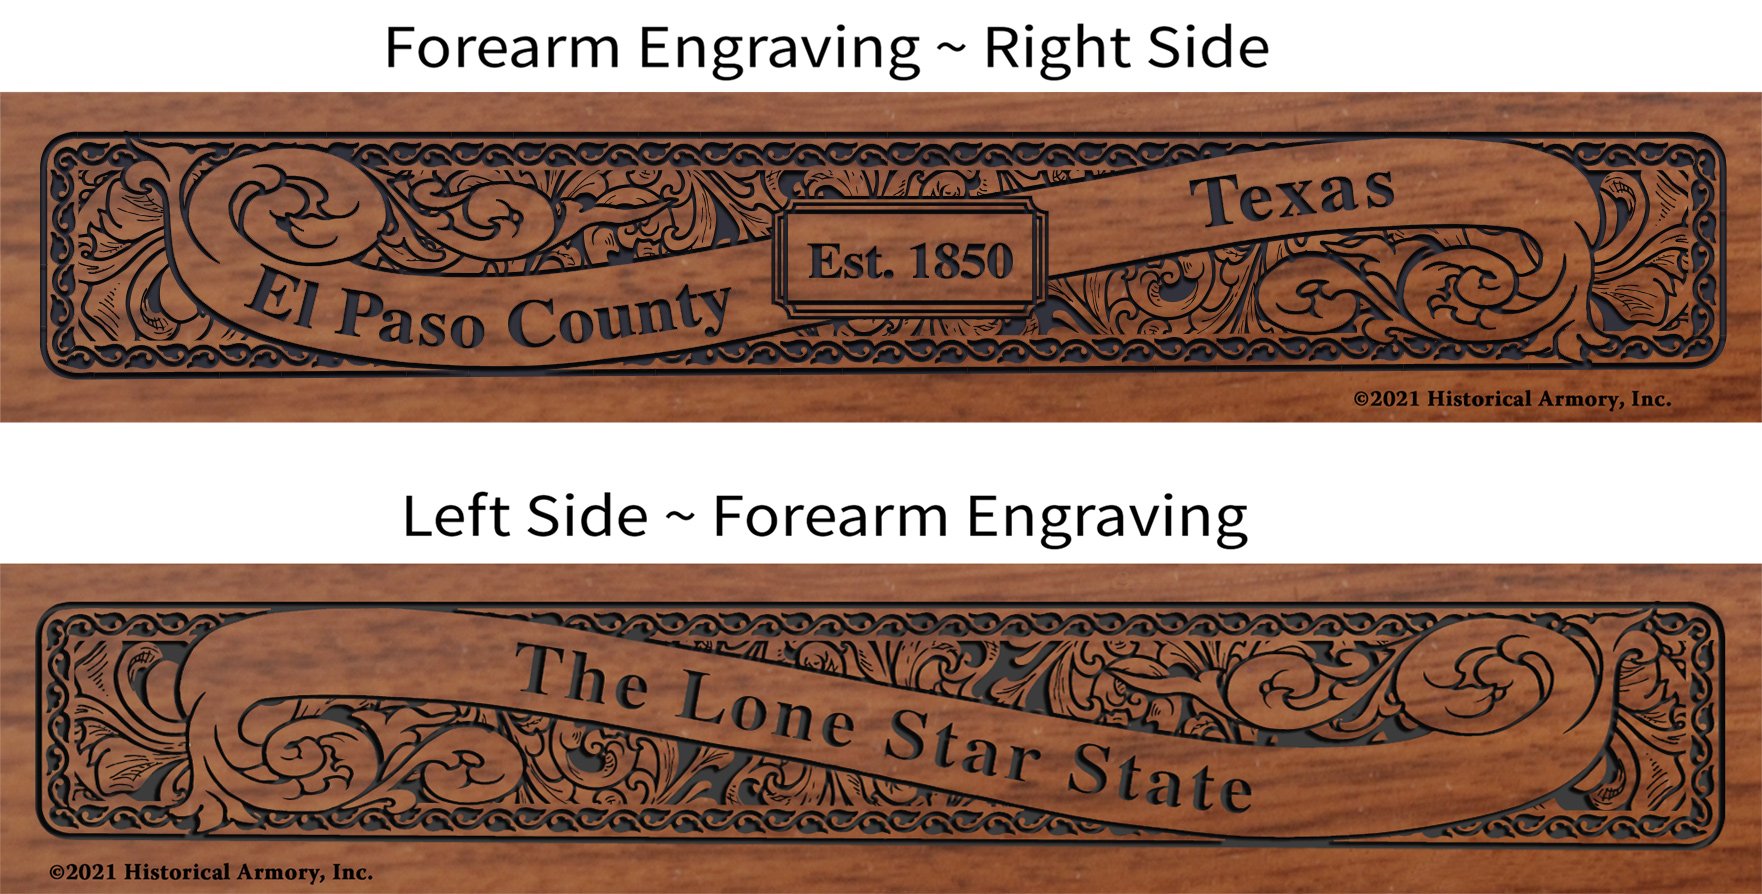 El Paso County Texas Establishment and Motto History Engraved Rifle Forearm